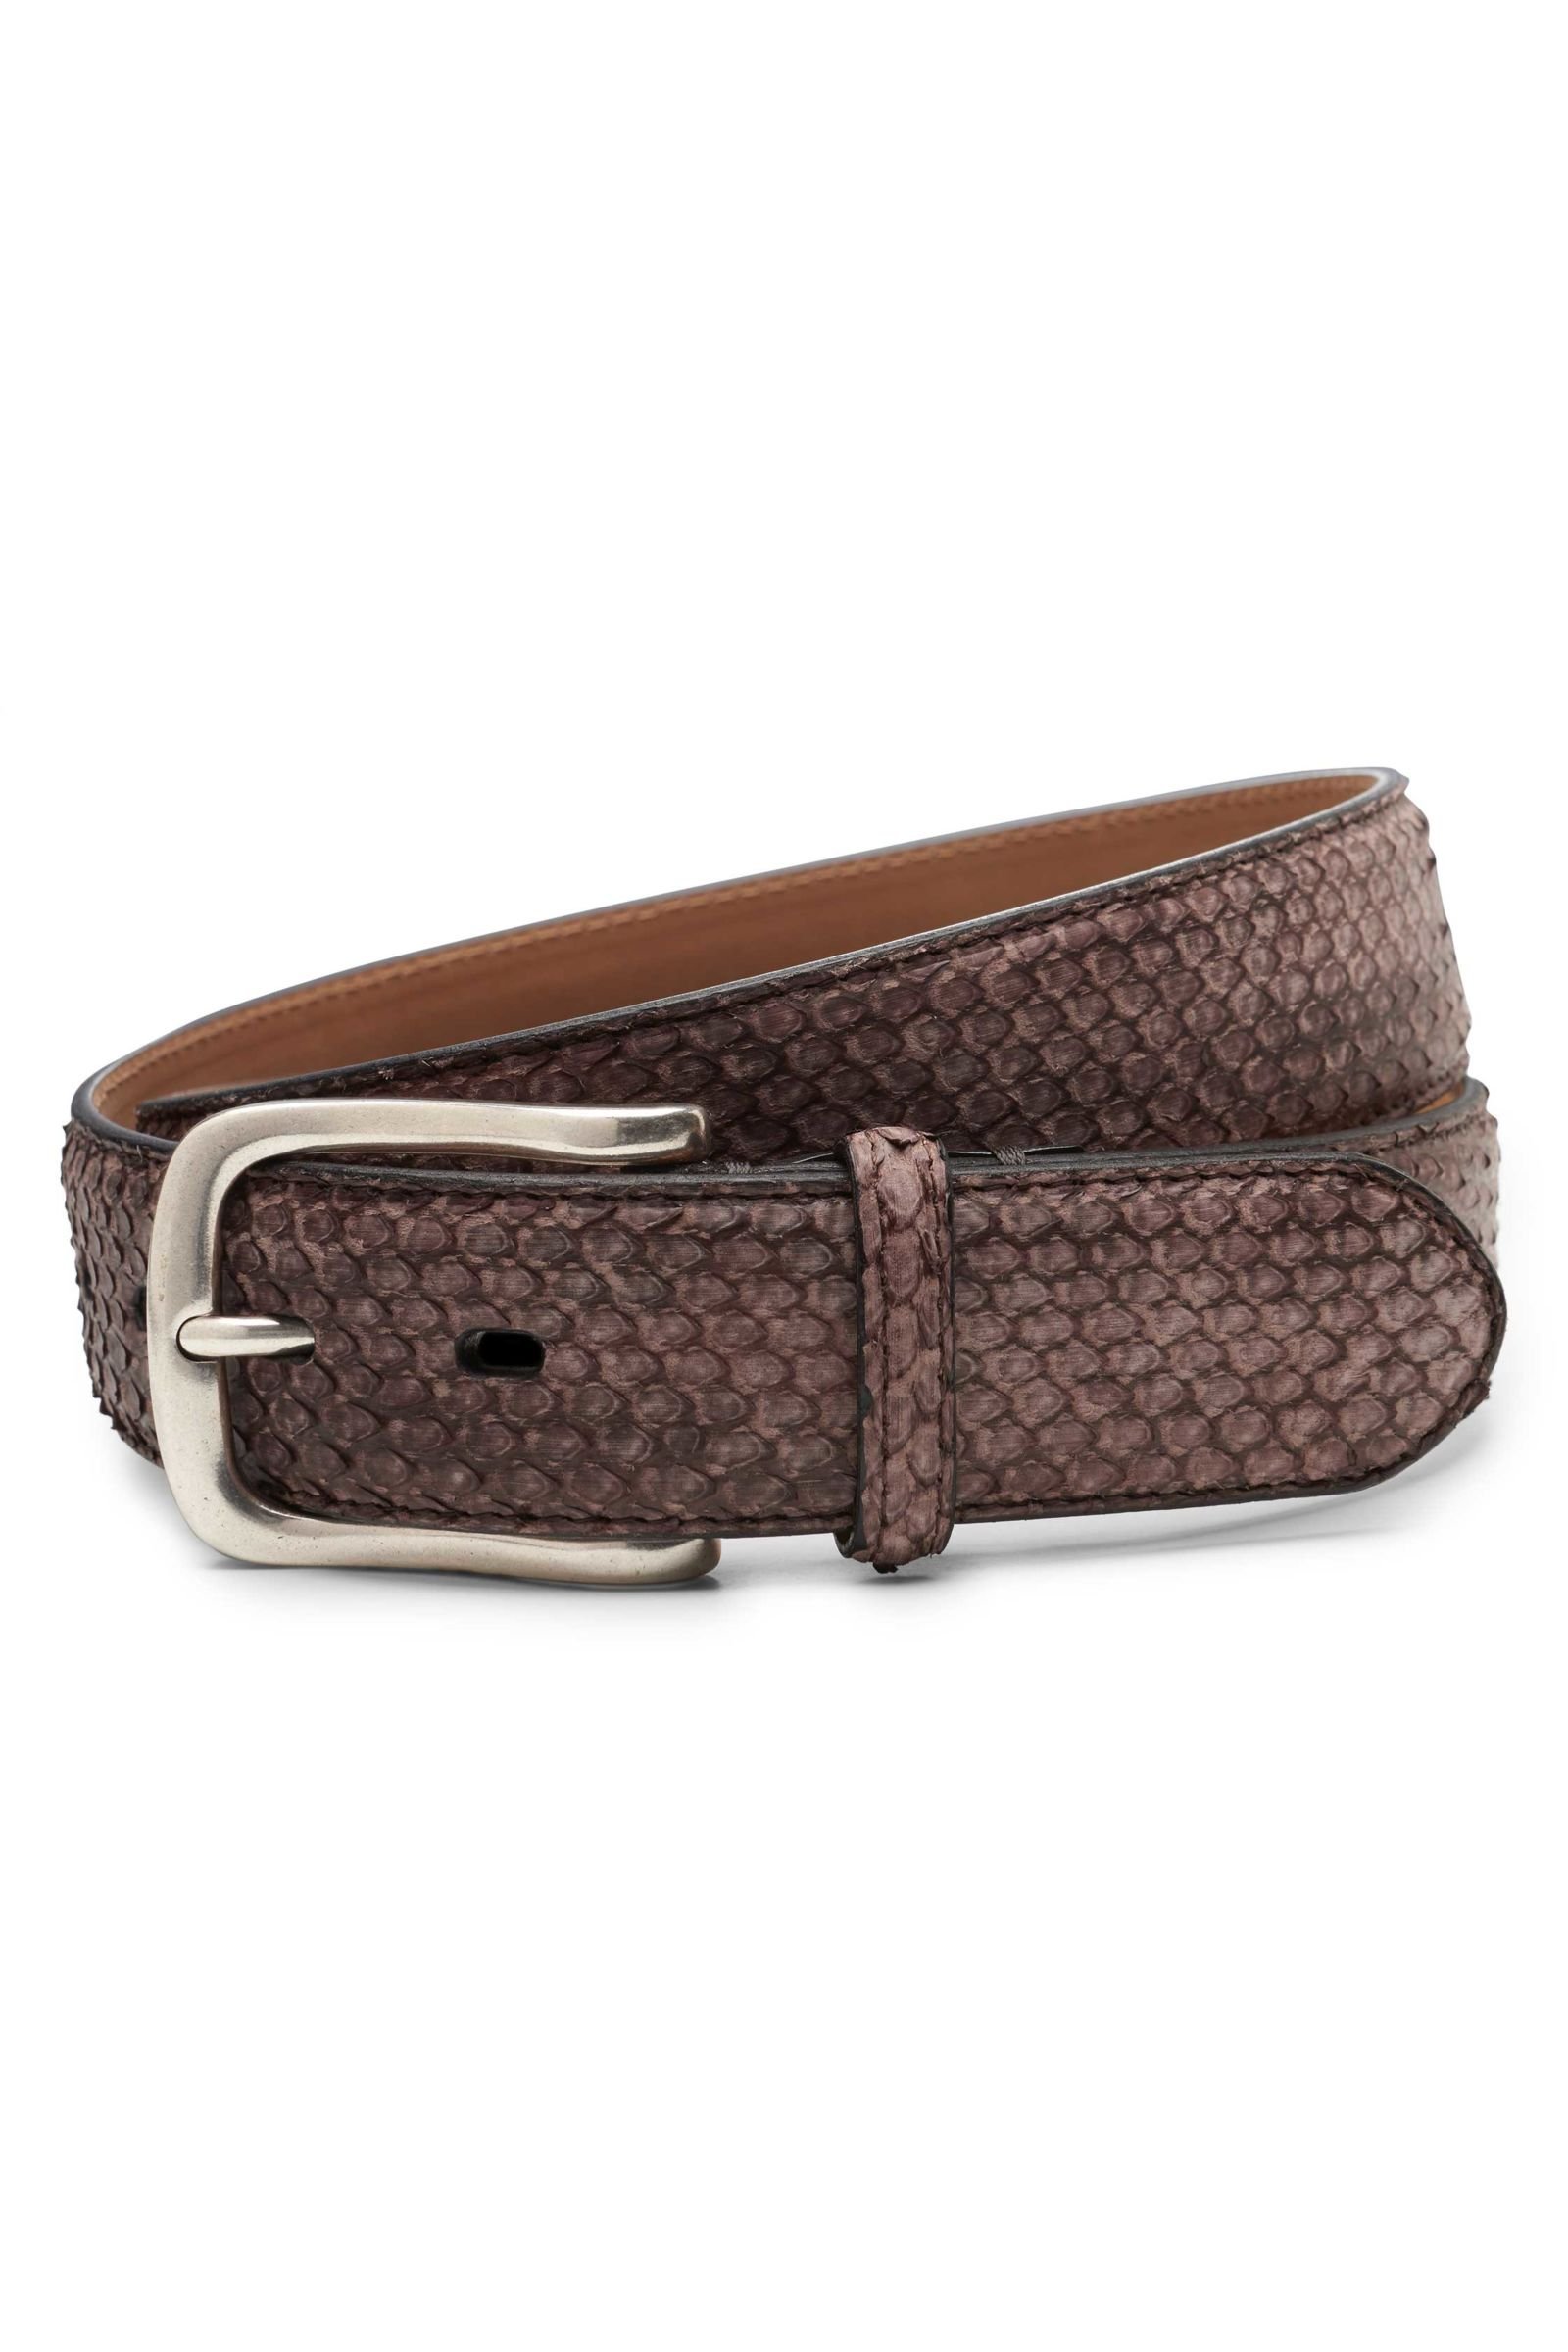 Python leather belt grey-brown